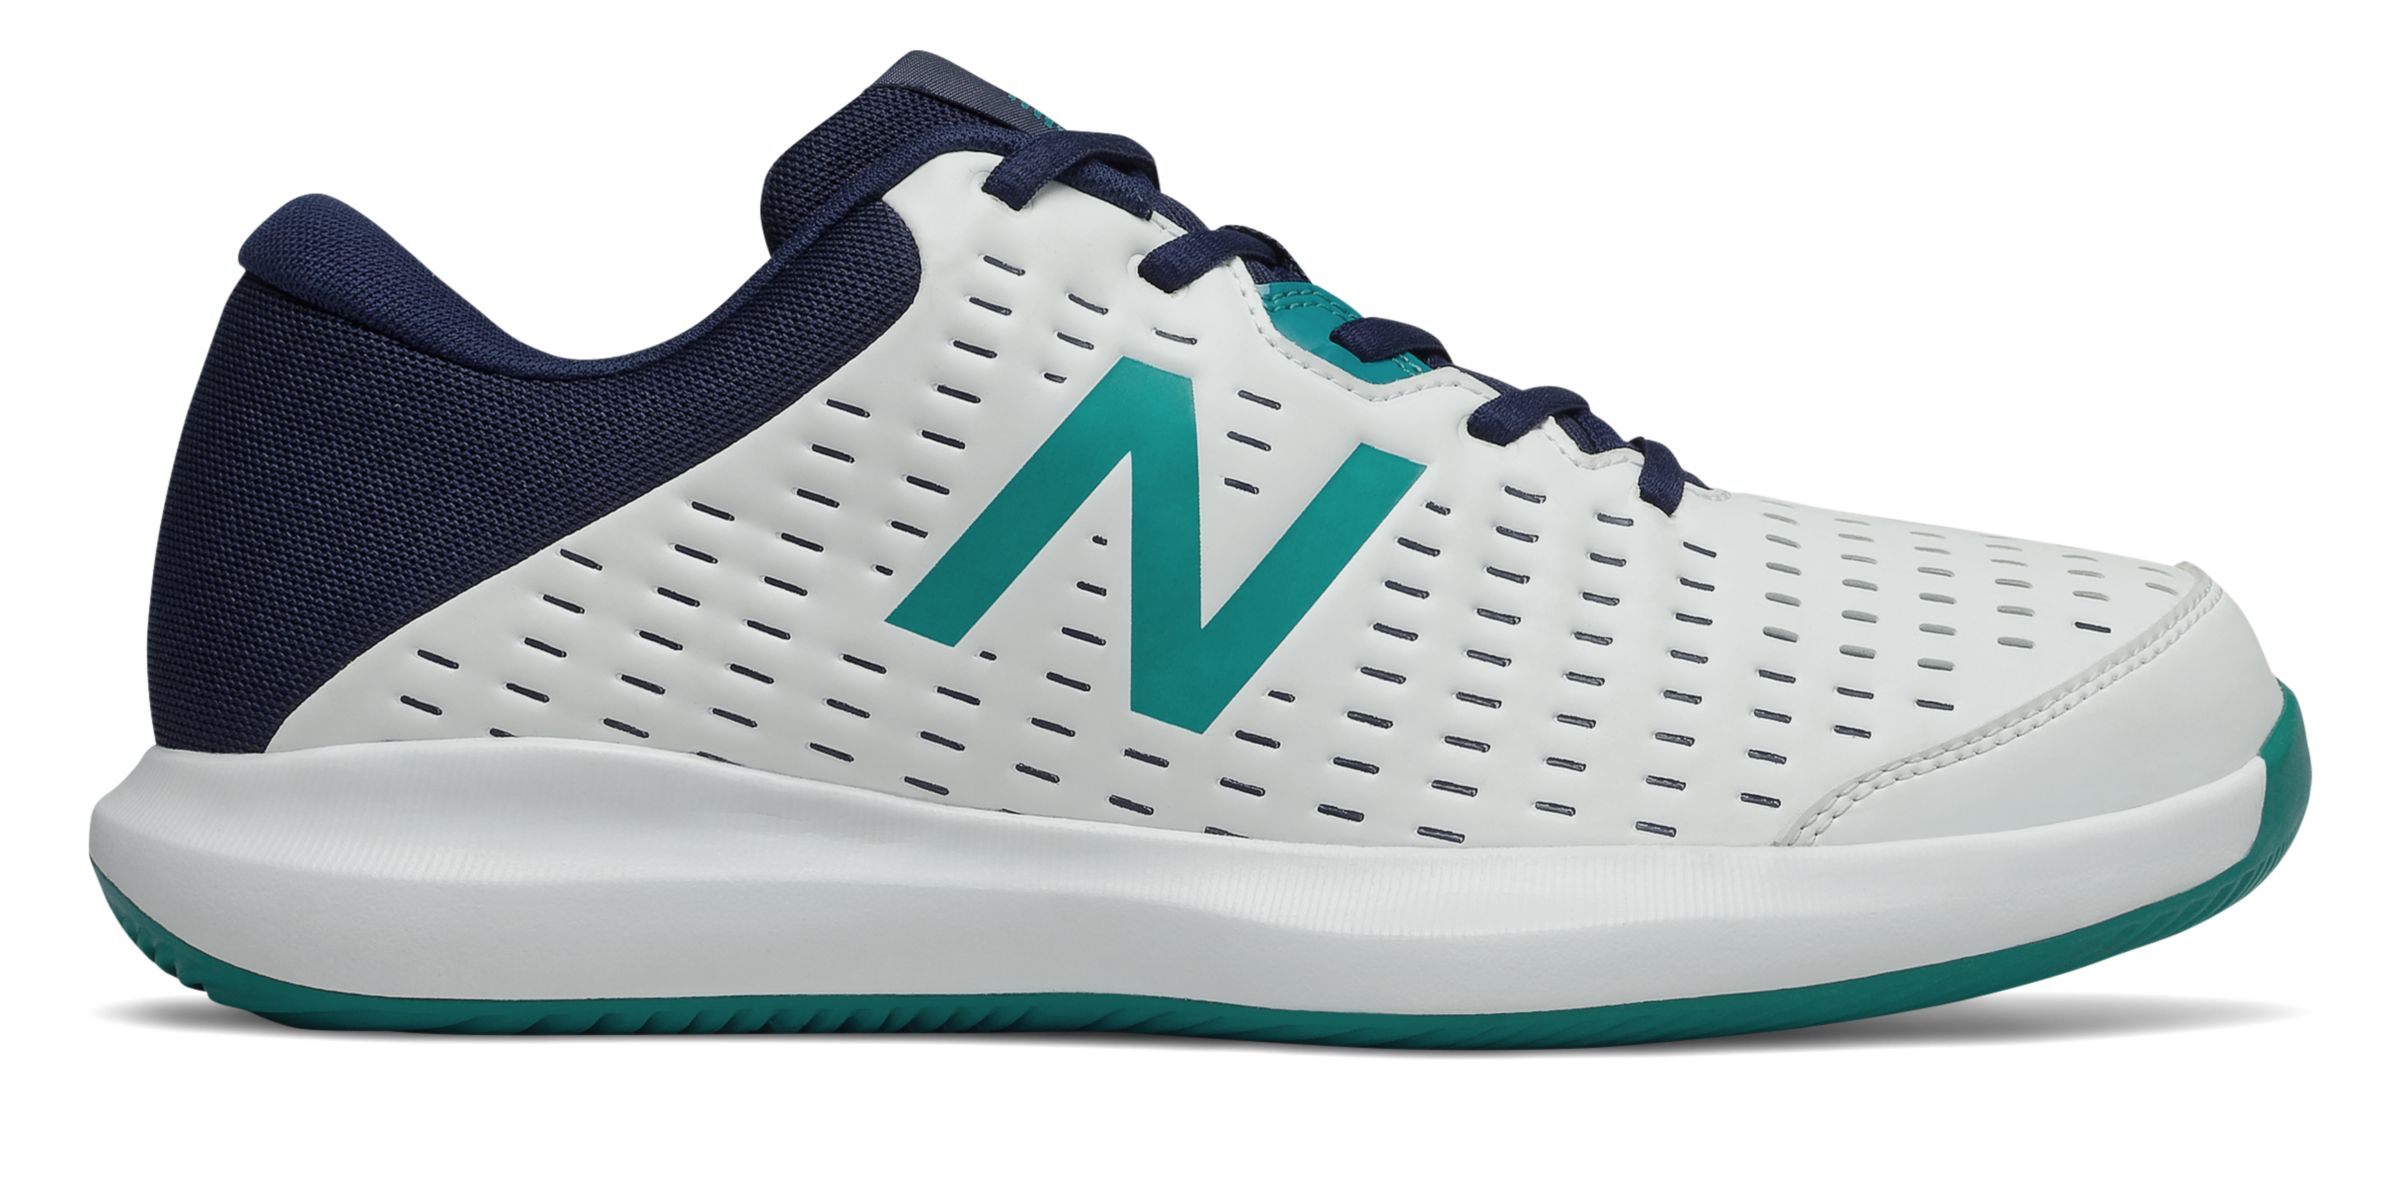 new balance mens white tennis shoes